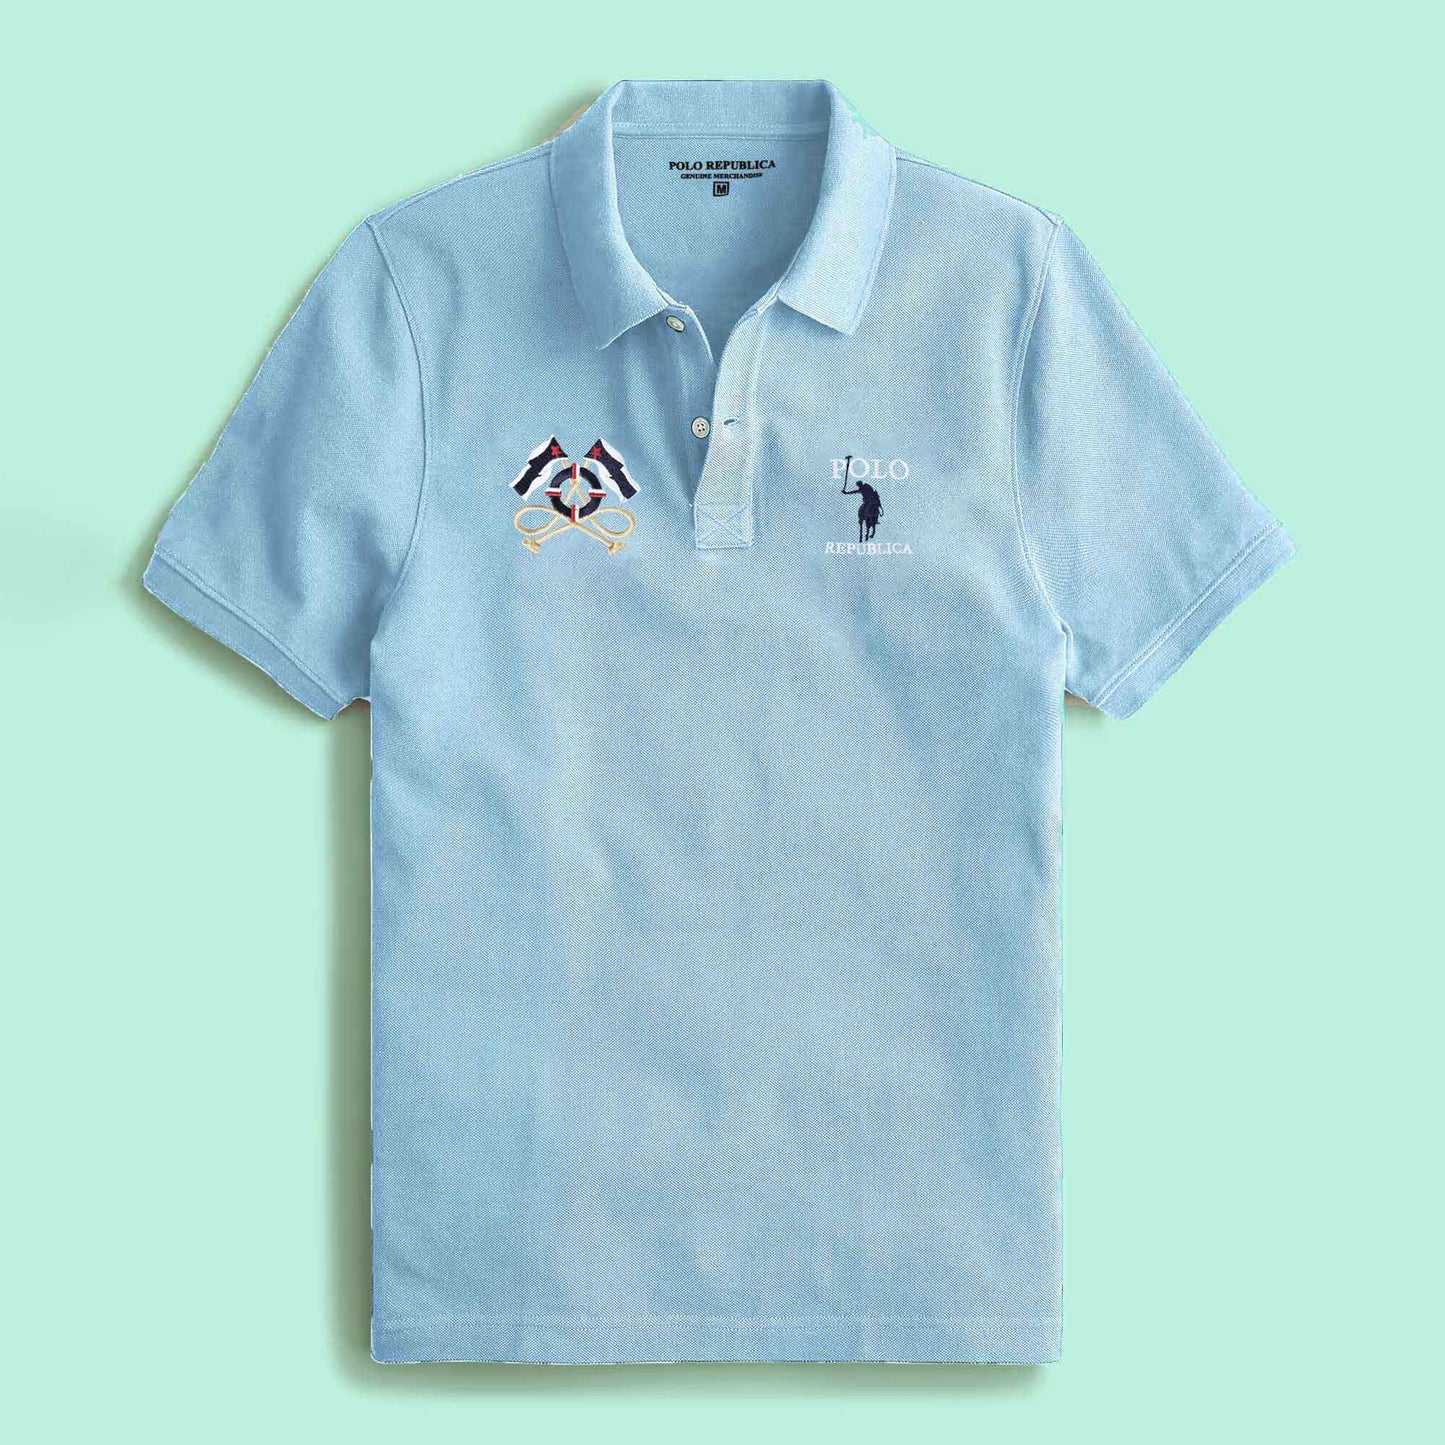 Polo Republica Men's Logo & 2 Flag Crest Embroidered Short Sleeve Polo Shirt Men's Polo Shirt Polo Republica 